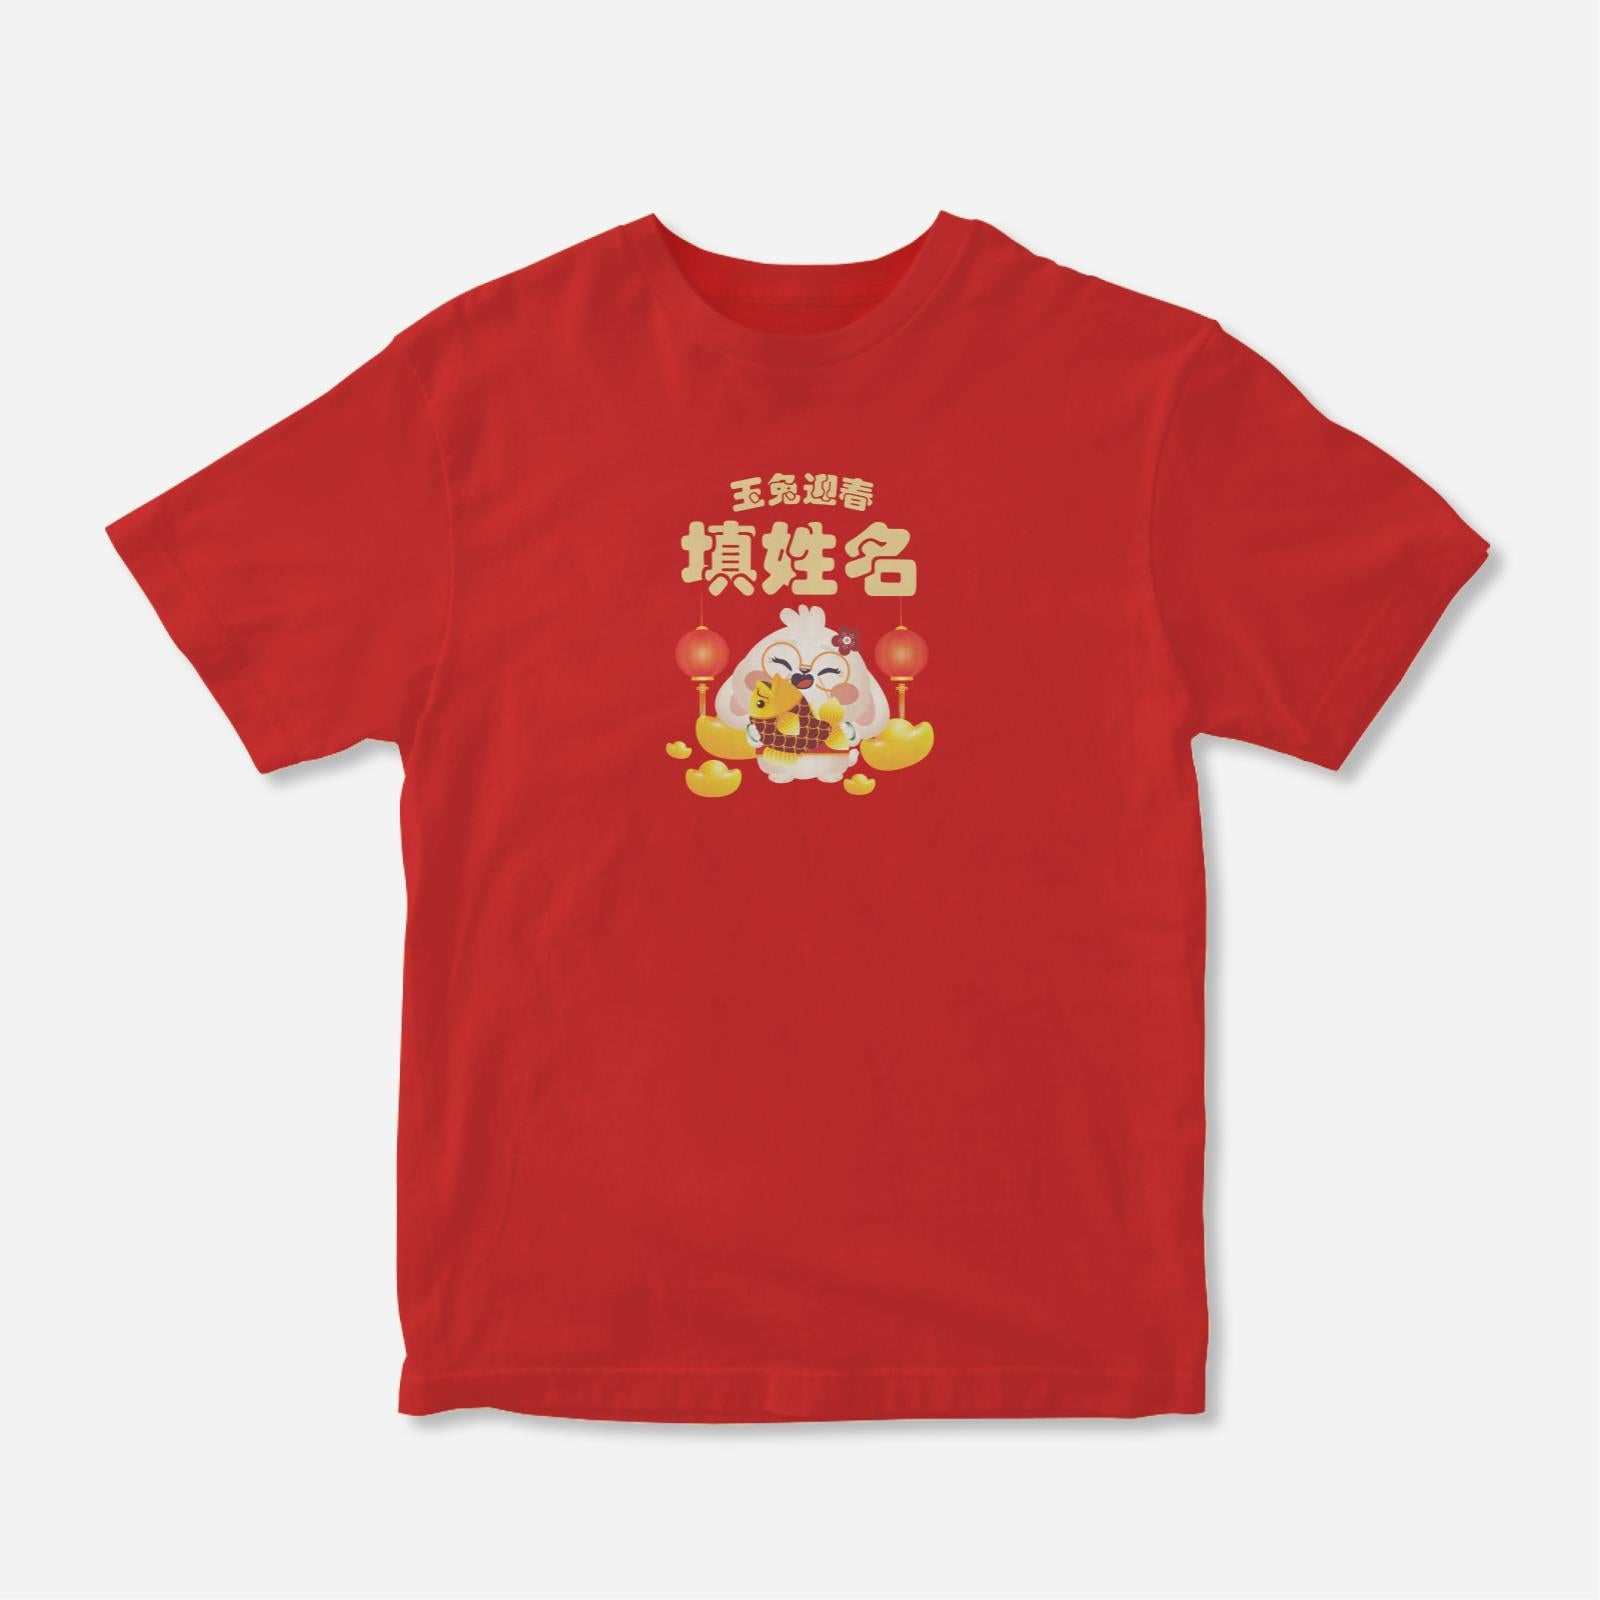 Cny Rabbit Family - Grandma Rabbit Kids Tee Shirt with Chinese Personalization